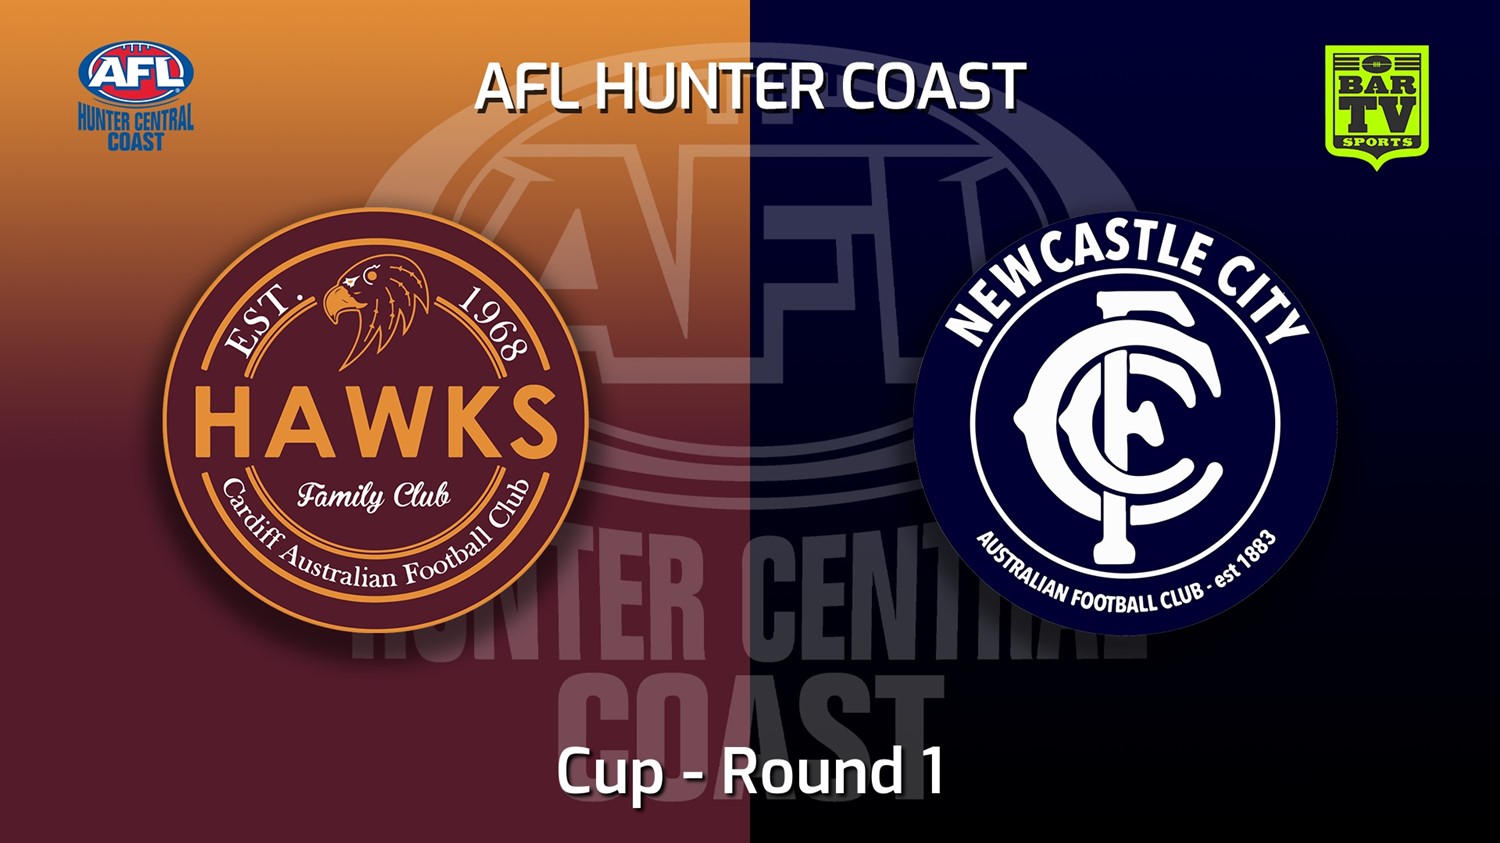 220402-AFL Hunter Central Coast Round 1 - Cup - Cardiff Hawks v Newcastle City  Minigame Slate Image